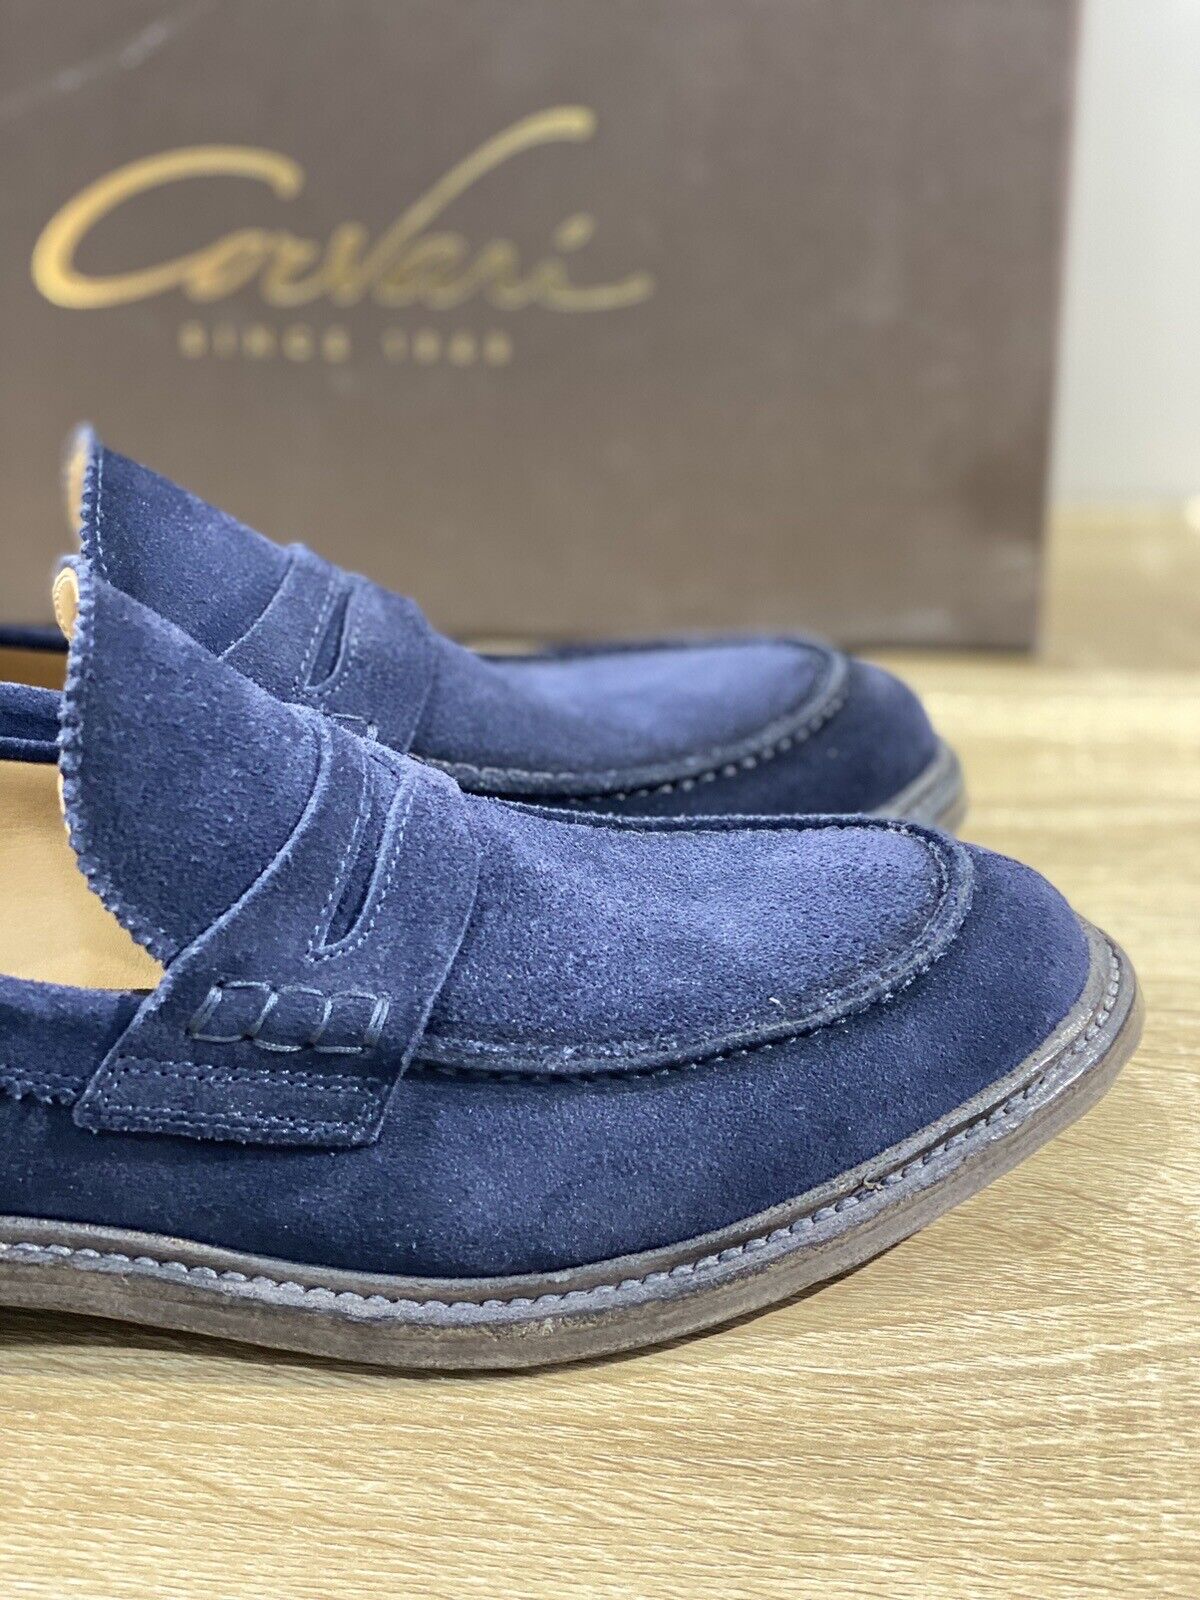 Corvari Mocassino Uomo Suede Softy Blu Luxury Men Shoes Handmade 42